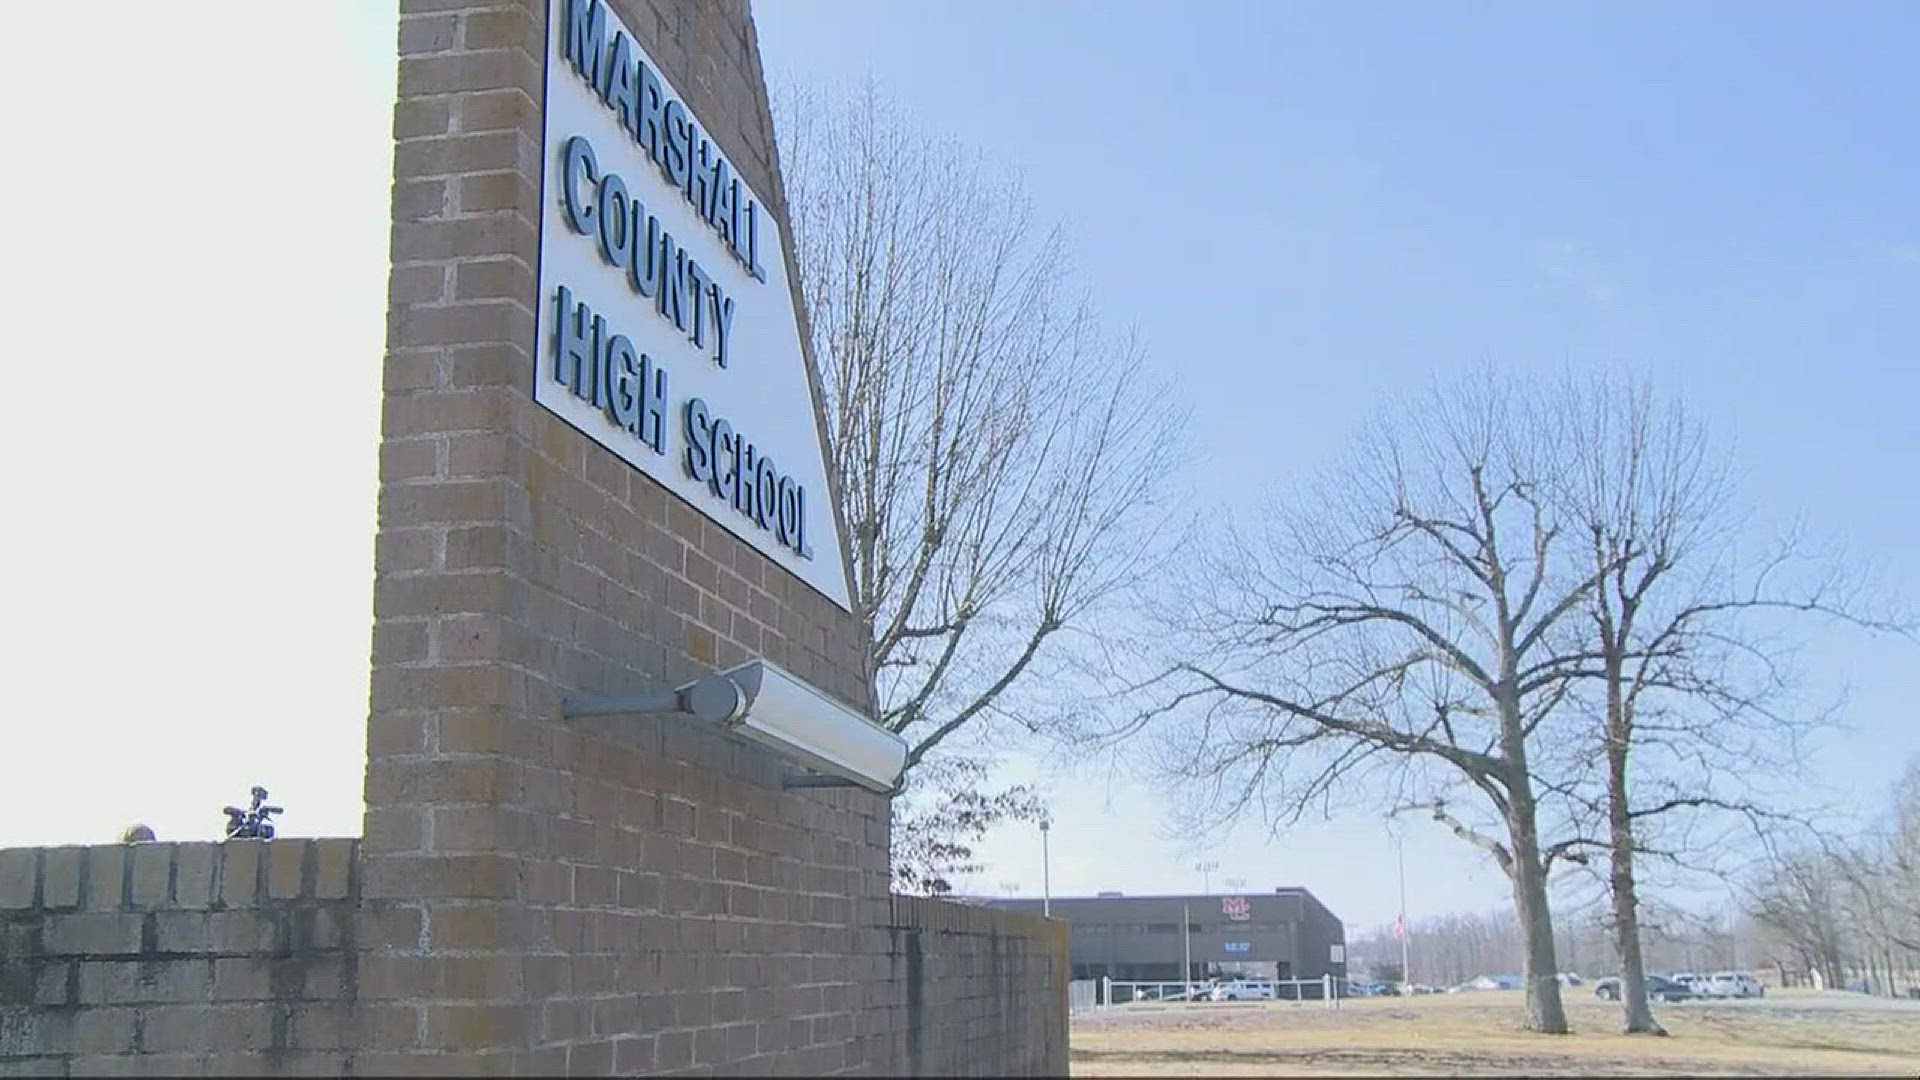 School shooting suspect expected in court